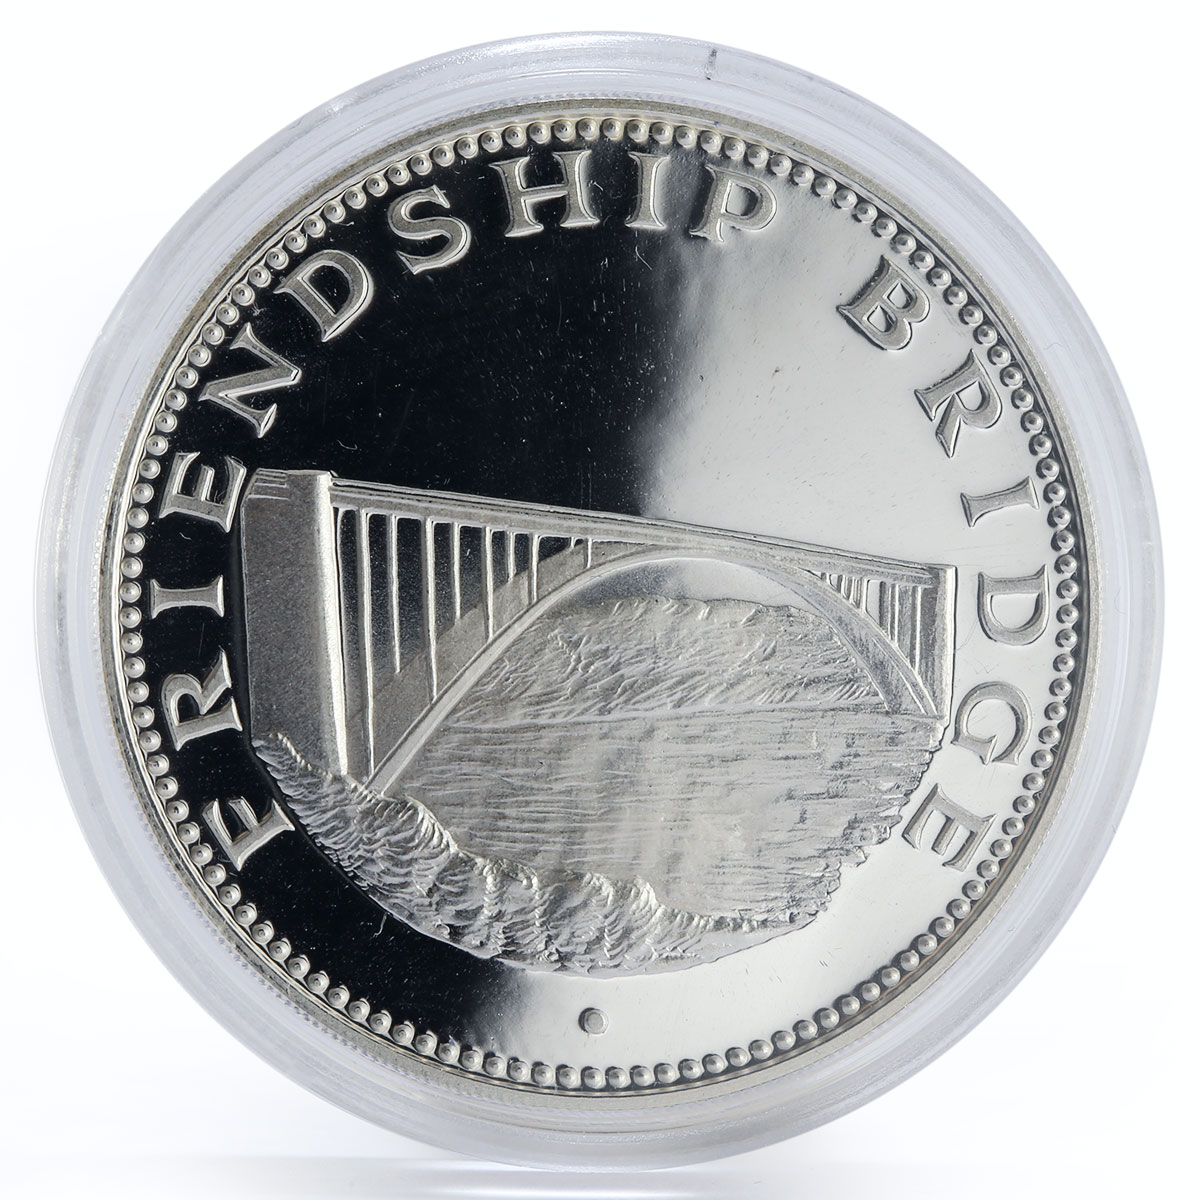 Paraguay 150 guaranies Friendship Bridge proof silver coin 1975